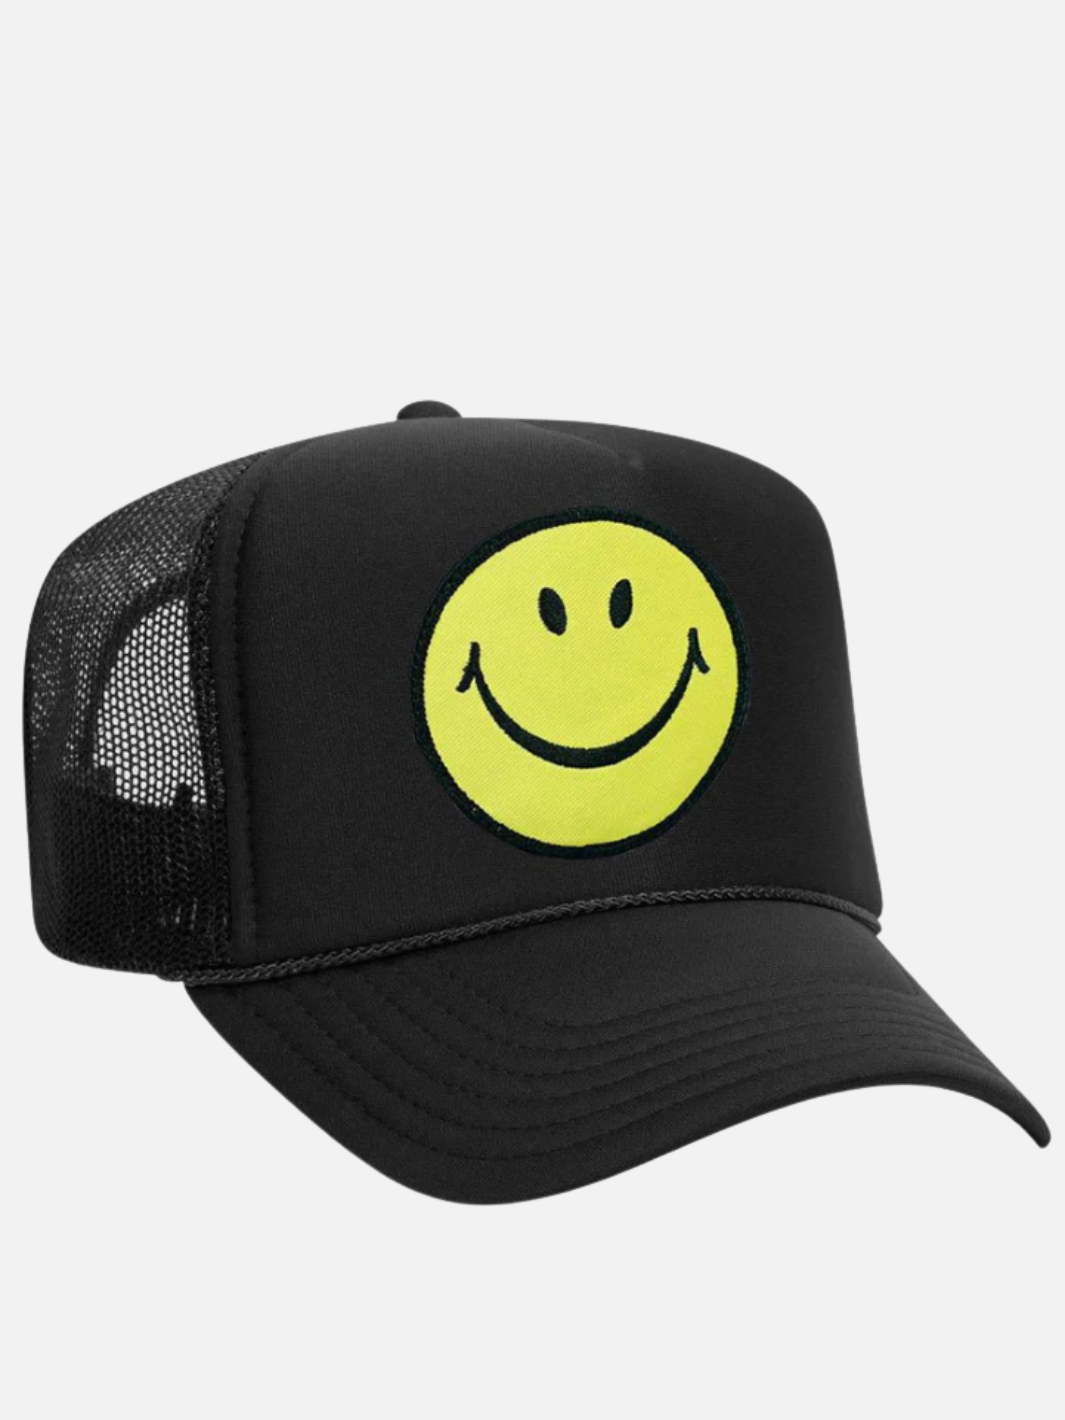 SMILEY VINTAGE TRUCKER HAT IN BLACK - Romi Boutique